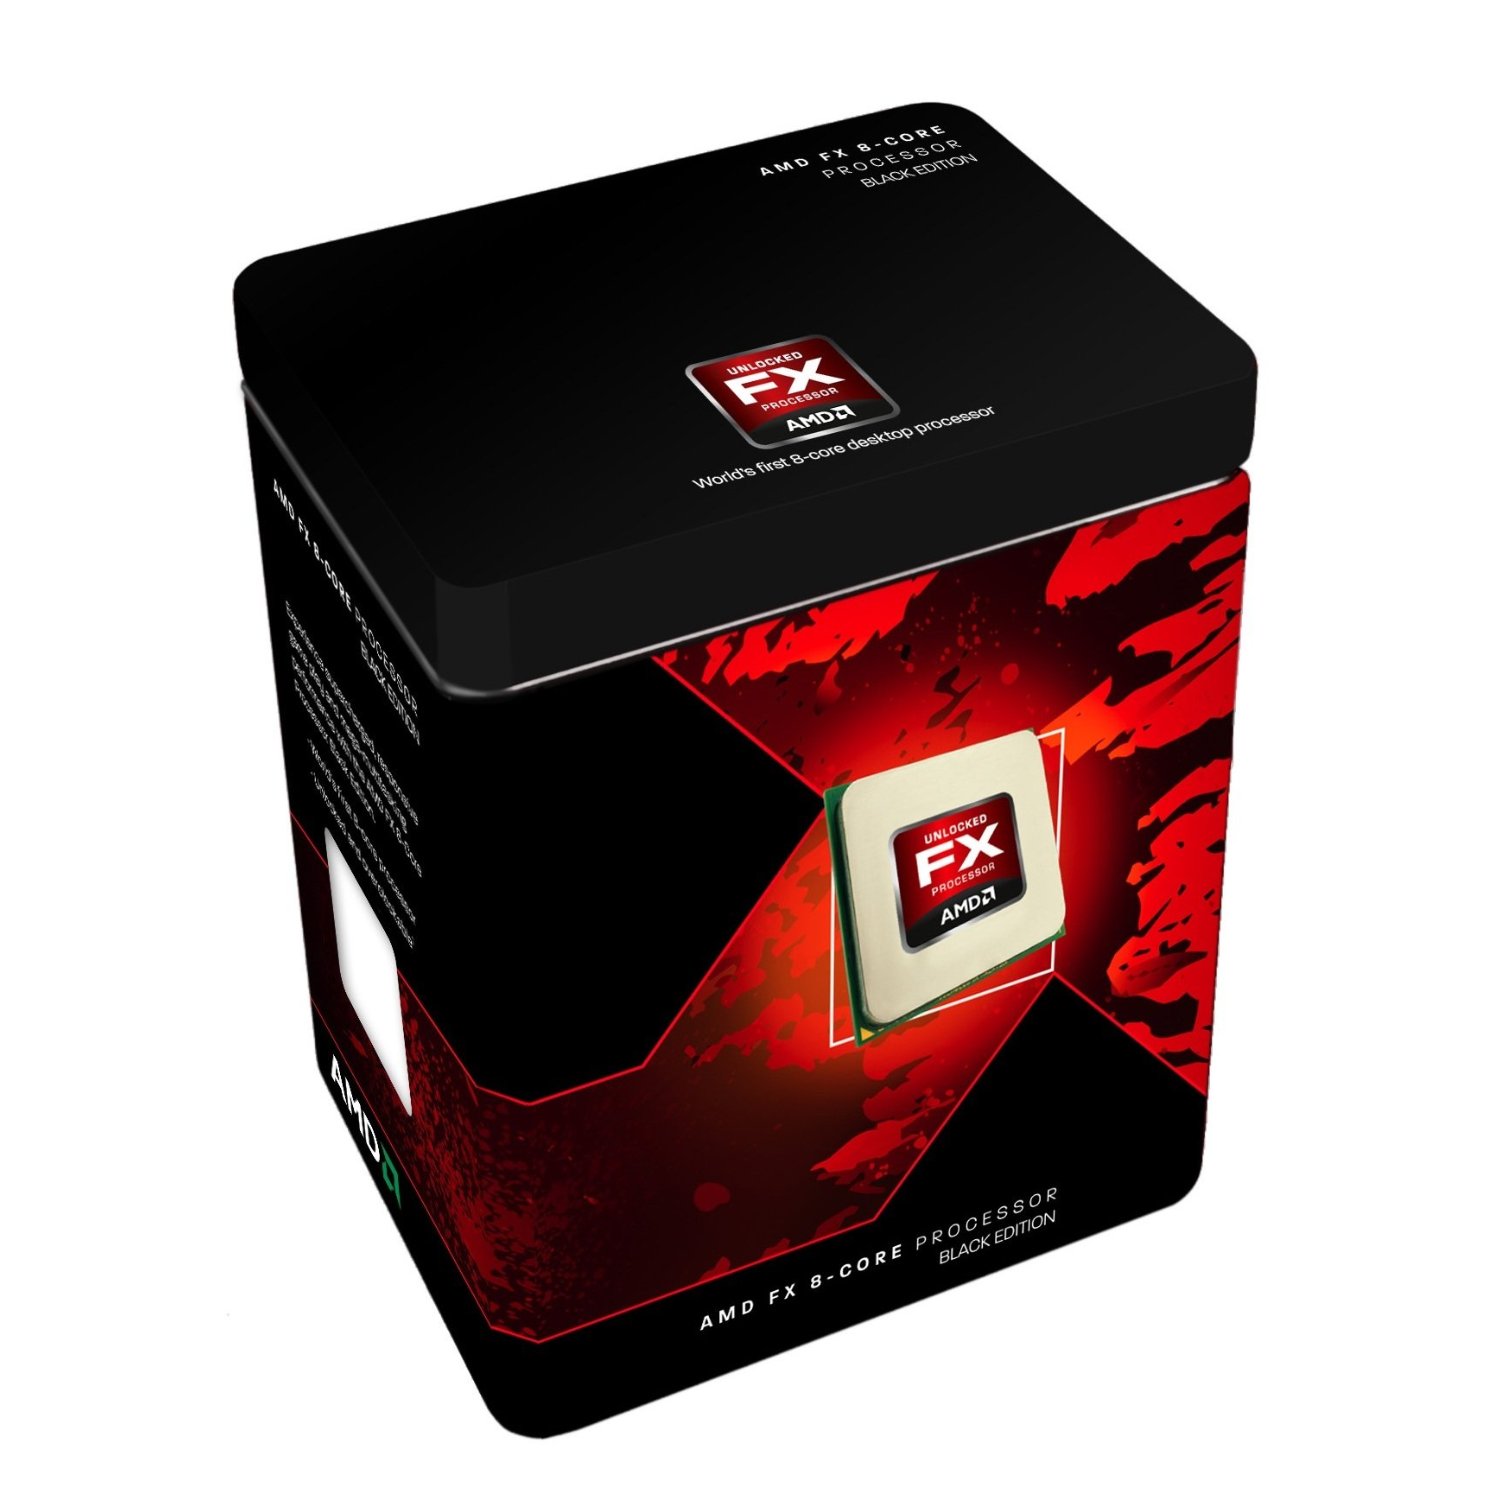 Updated Windows 7 AMD Bulldozer Patch Ready